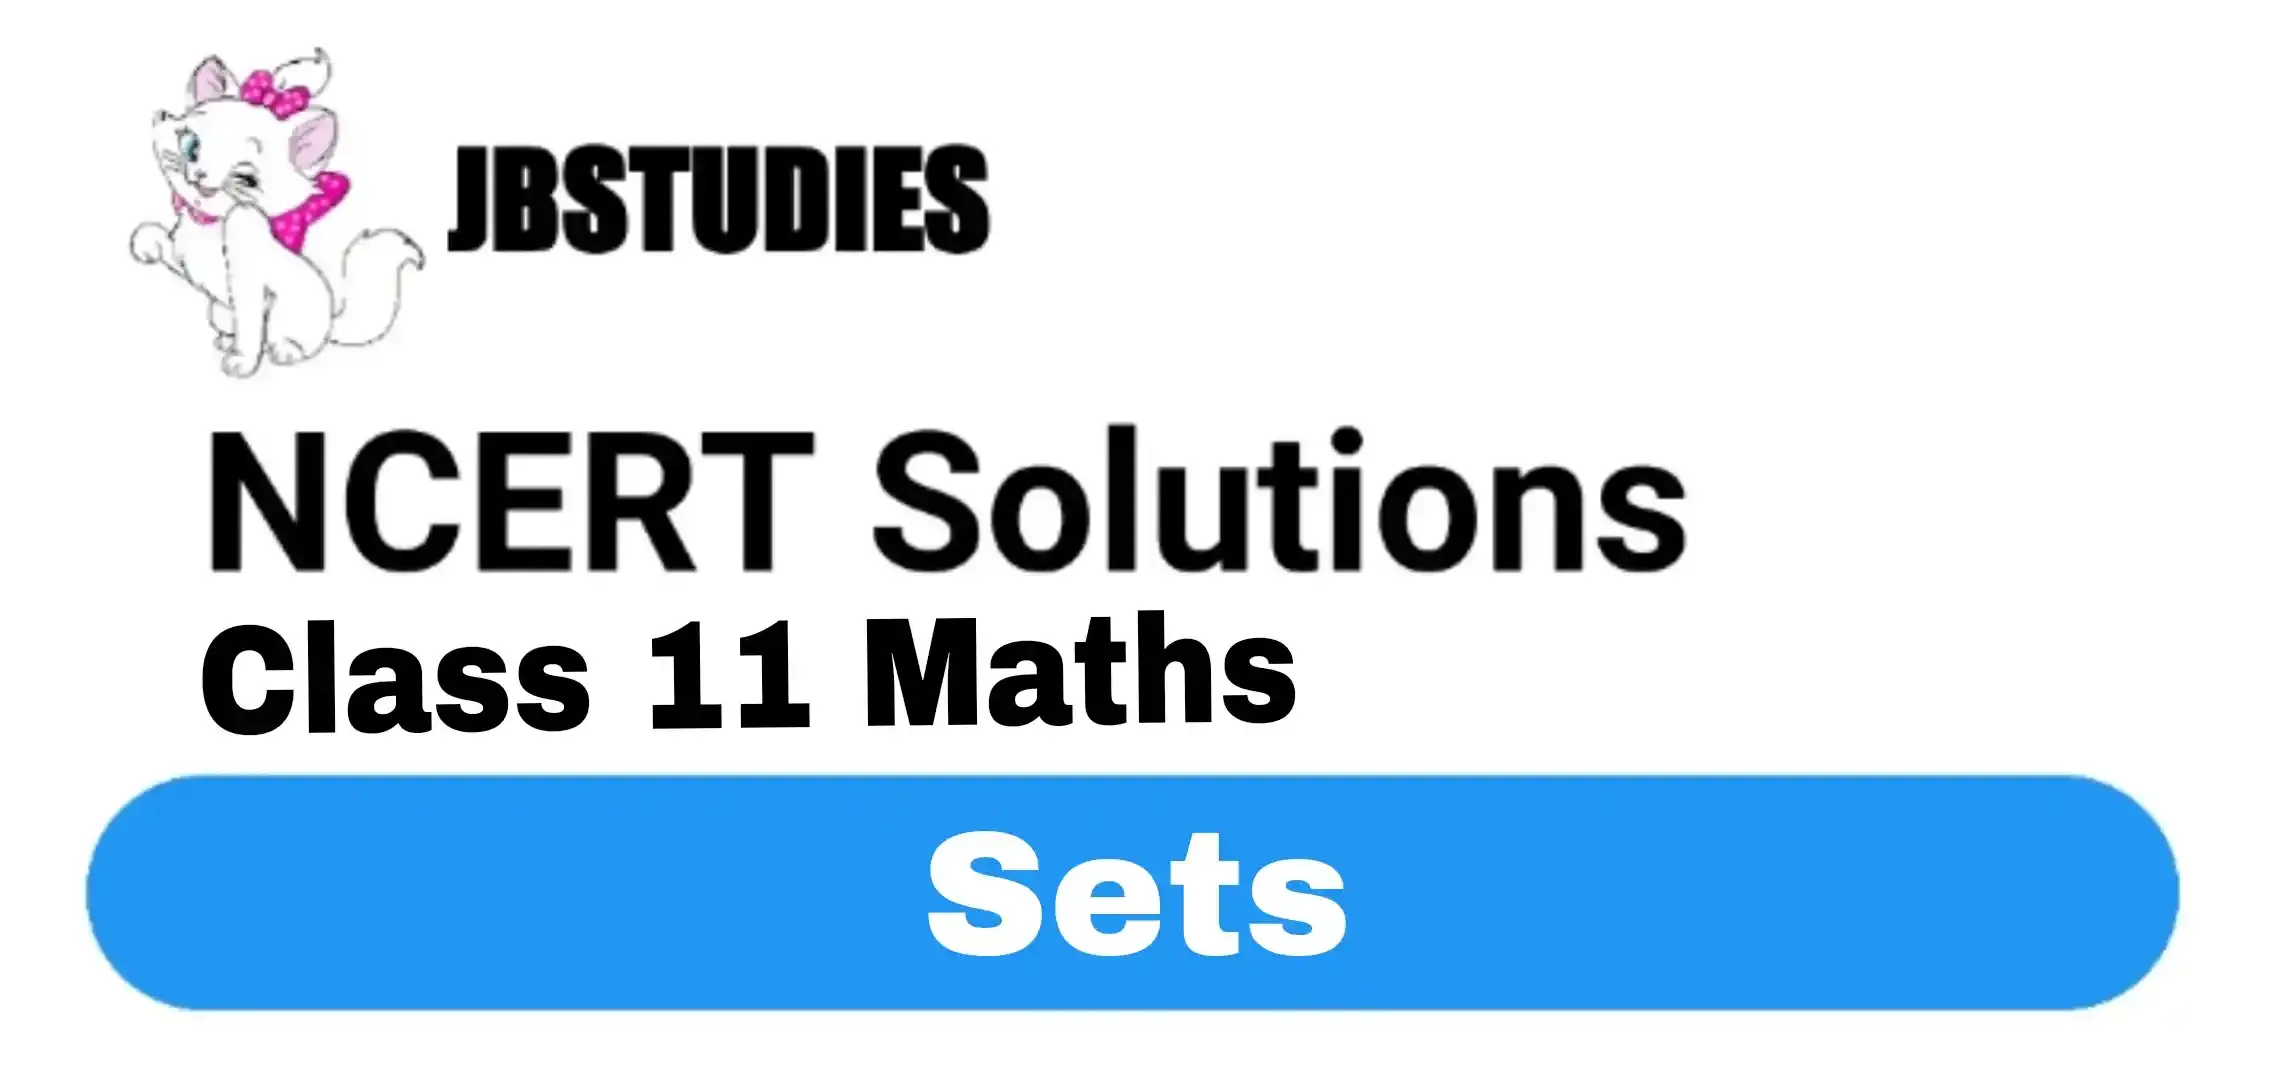 Solutions Class 11 Maths Chapter-1 (Sets)